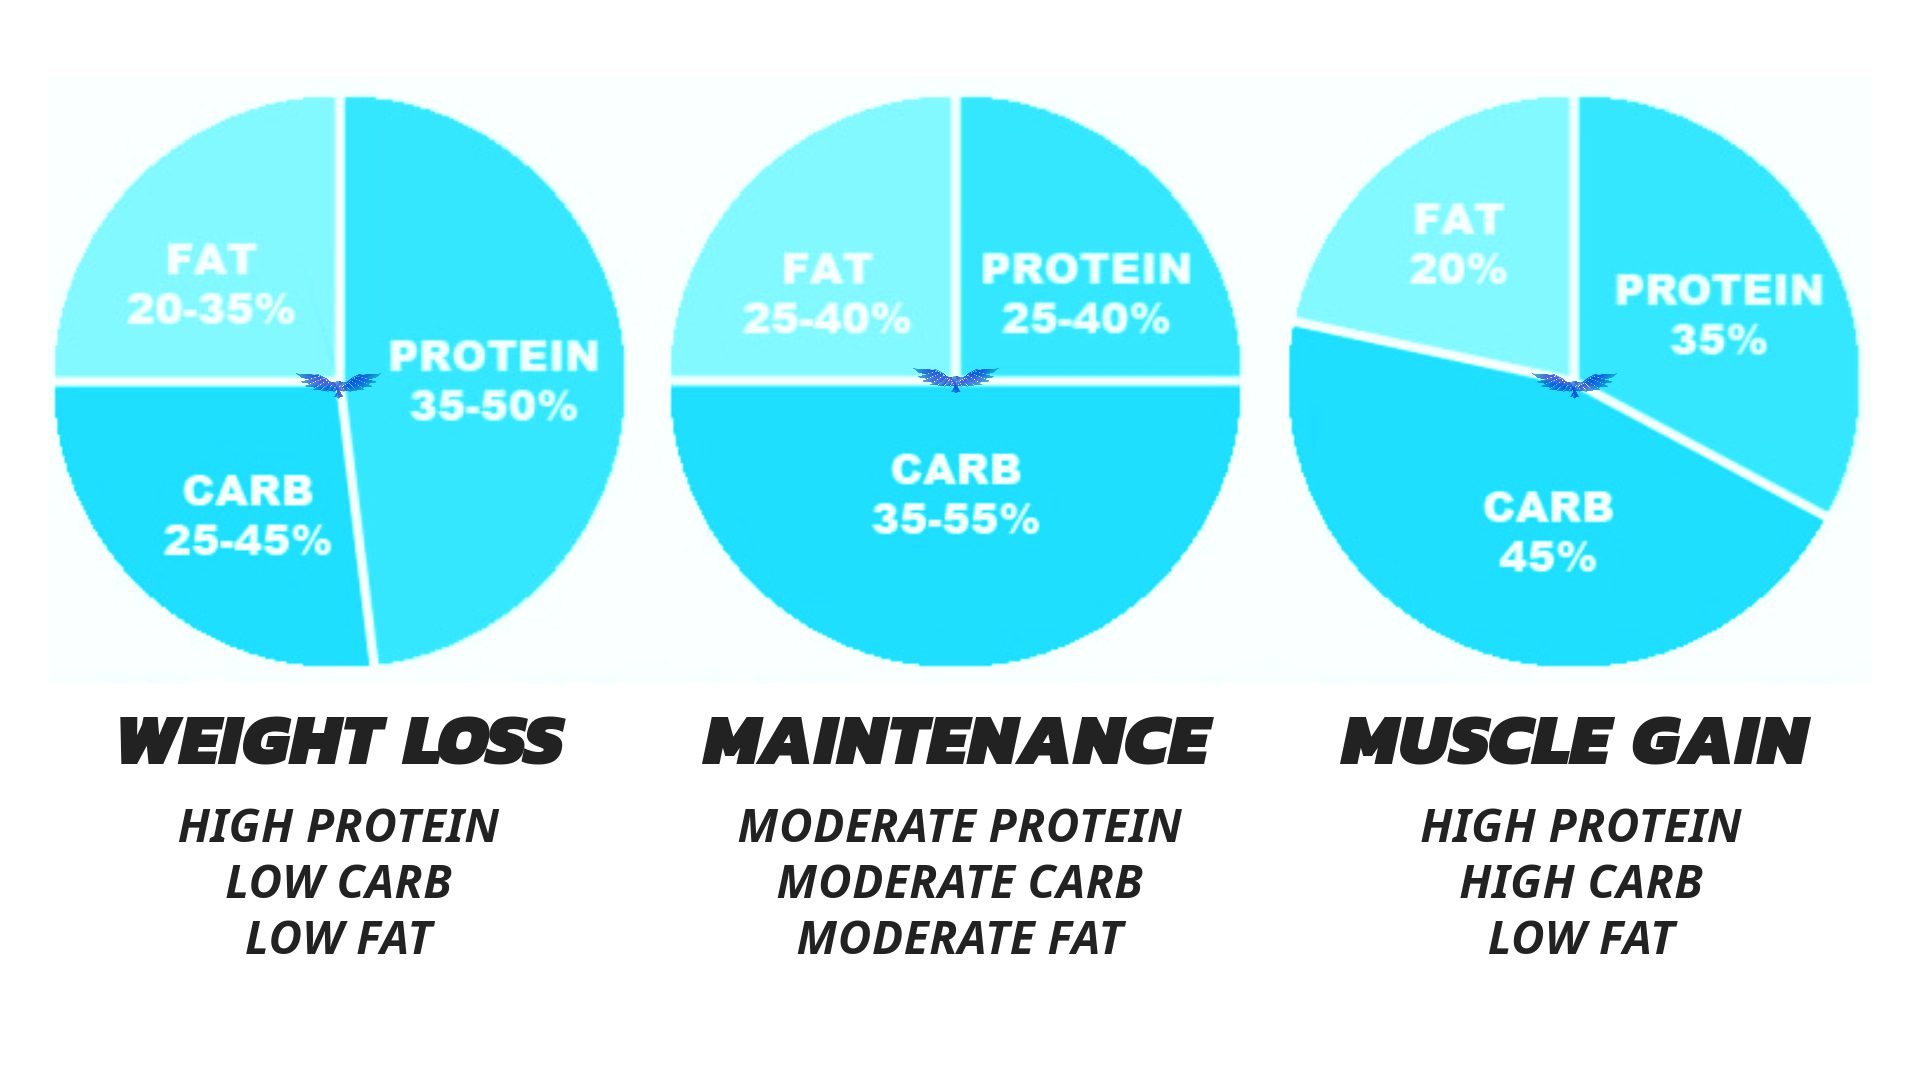 MACRO SPLIT FOR GOALS - FAT LOSS, MUSCLE, MAINTENANCE